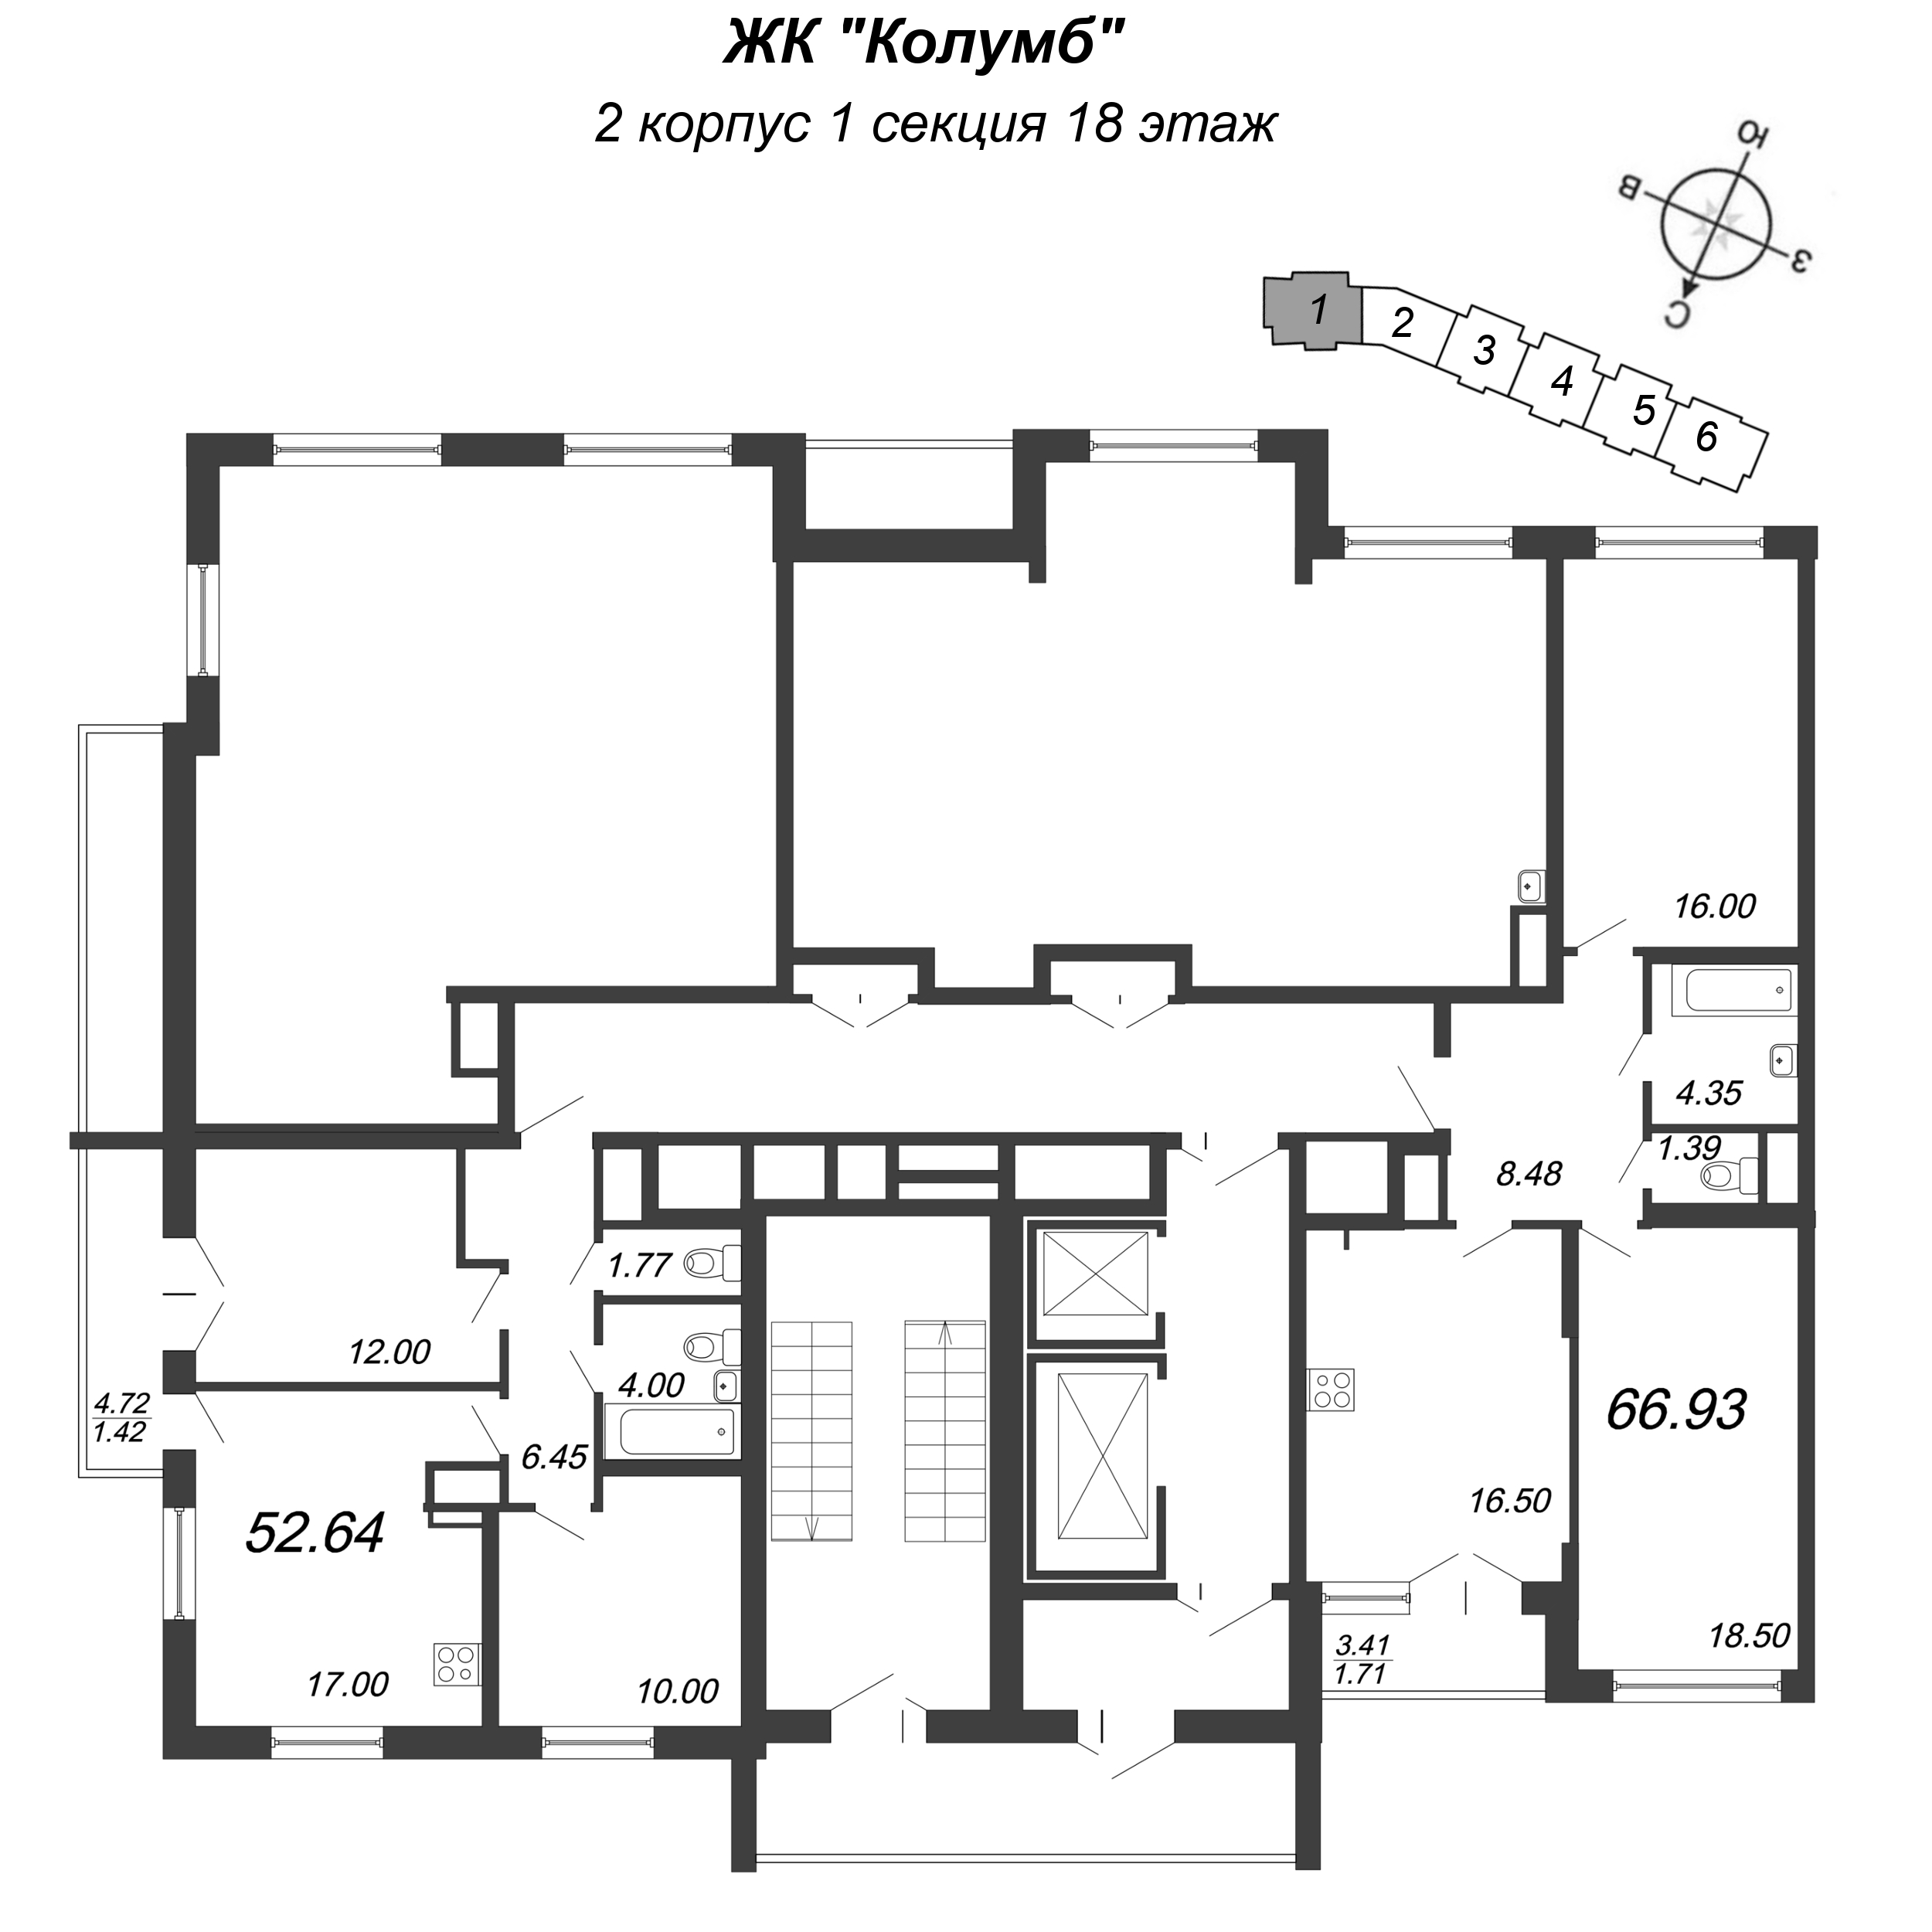 3-комнатная (Евро) квартира, 52.64 м² - планировка этажа